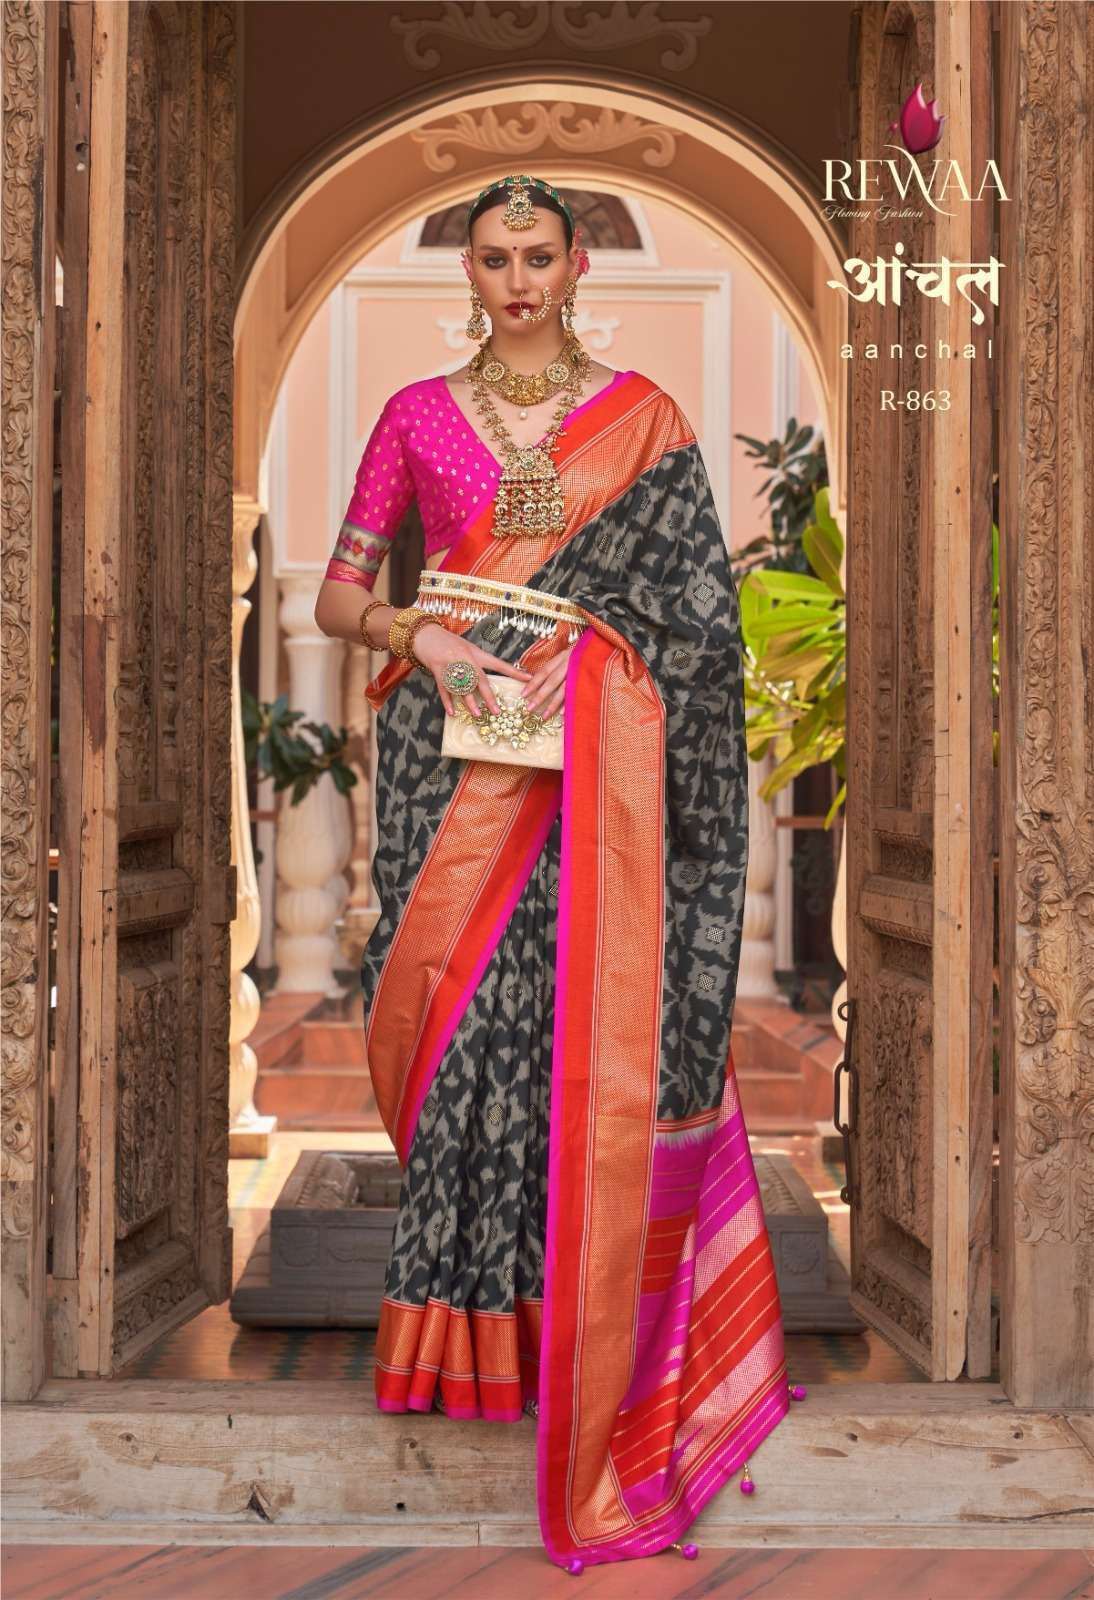 rewaa aanchal series 858-869 pv silk saree